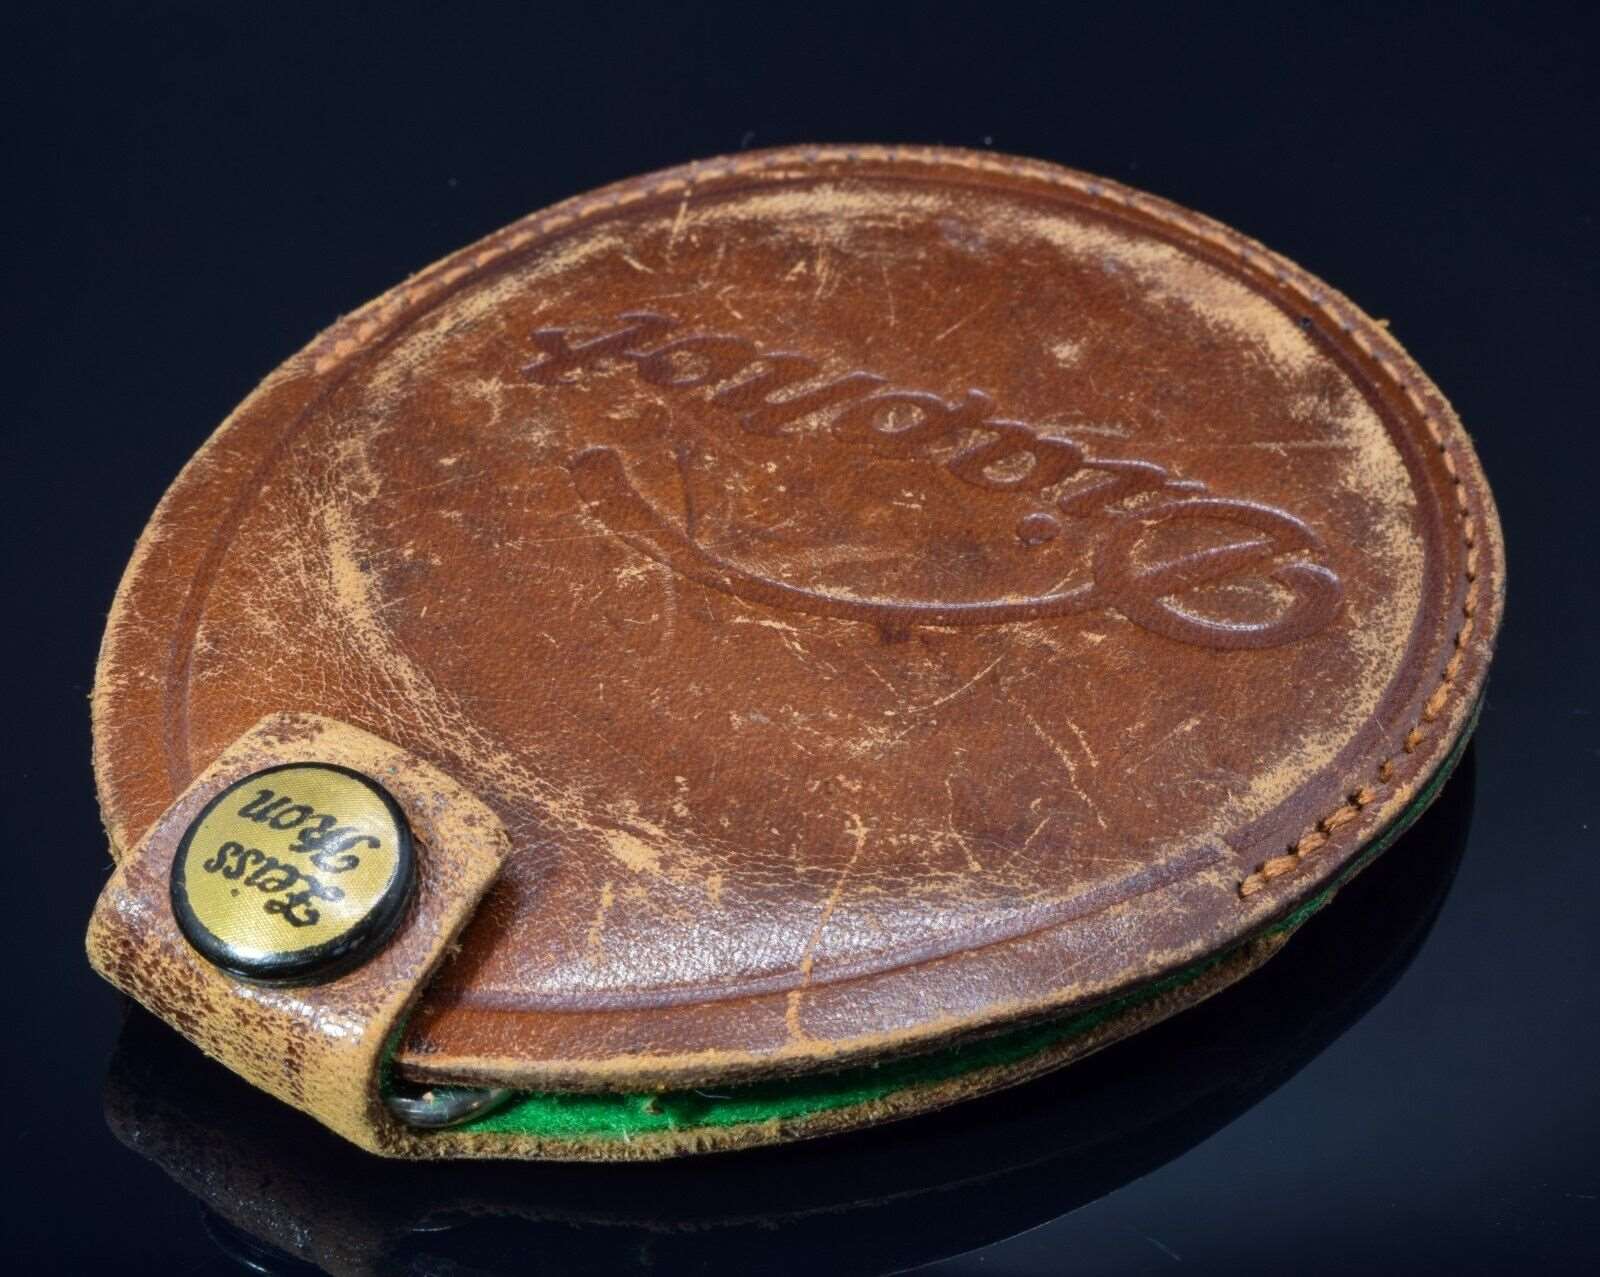 Zeiss Ikon Diaphot Extinction Light Exposure Meter Leather Branded Carry Wallet